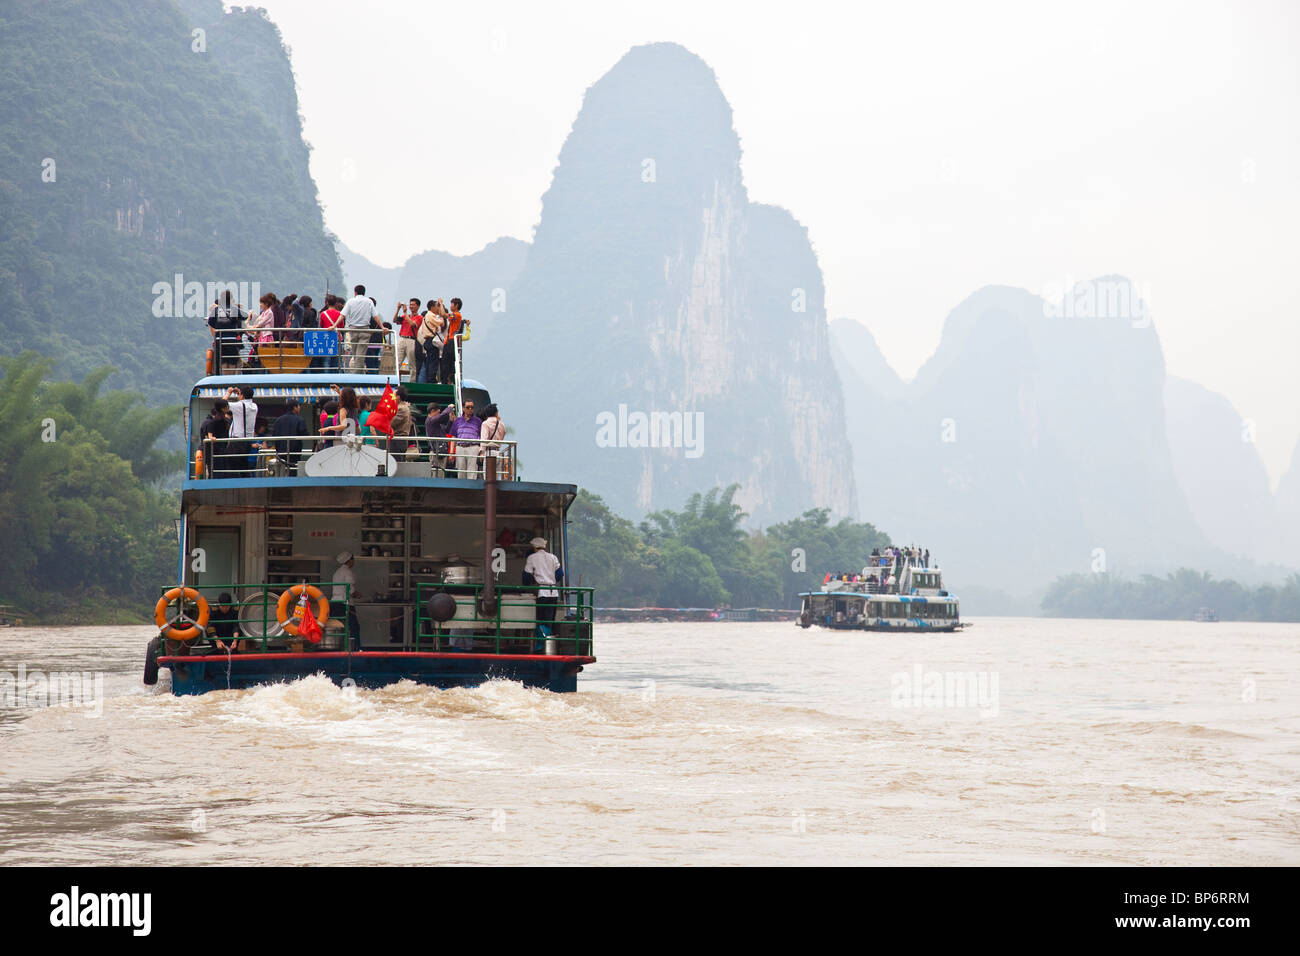 Tourist boat on the Li River, Guilin, China Stock Photo